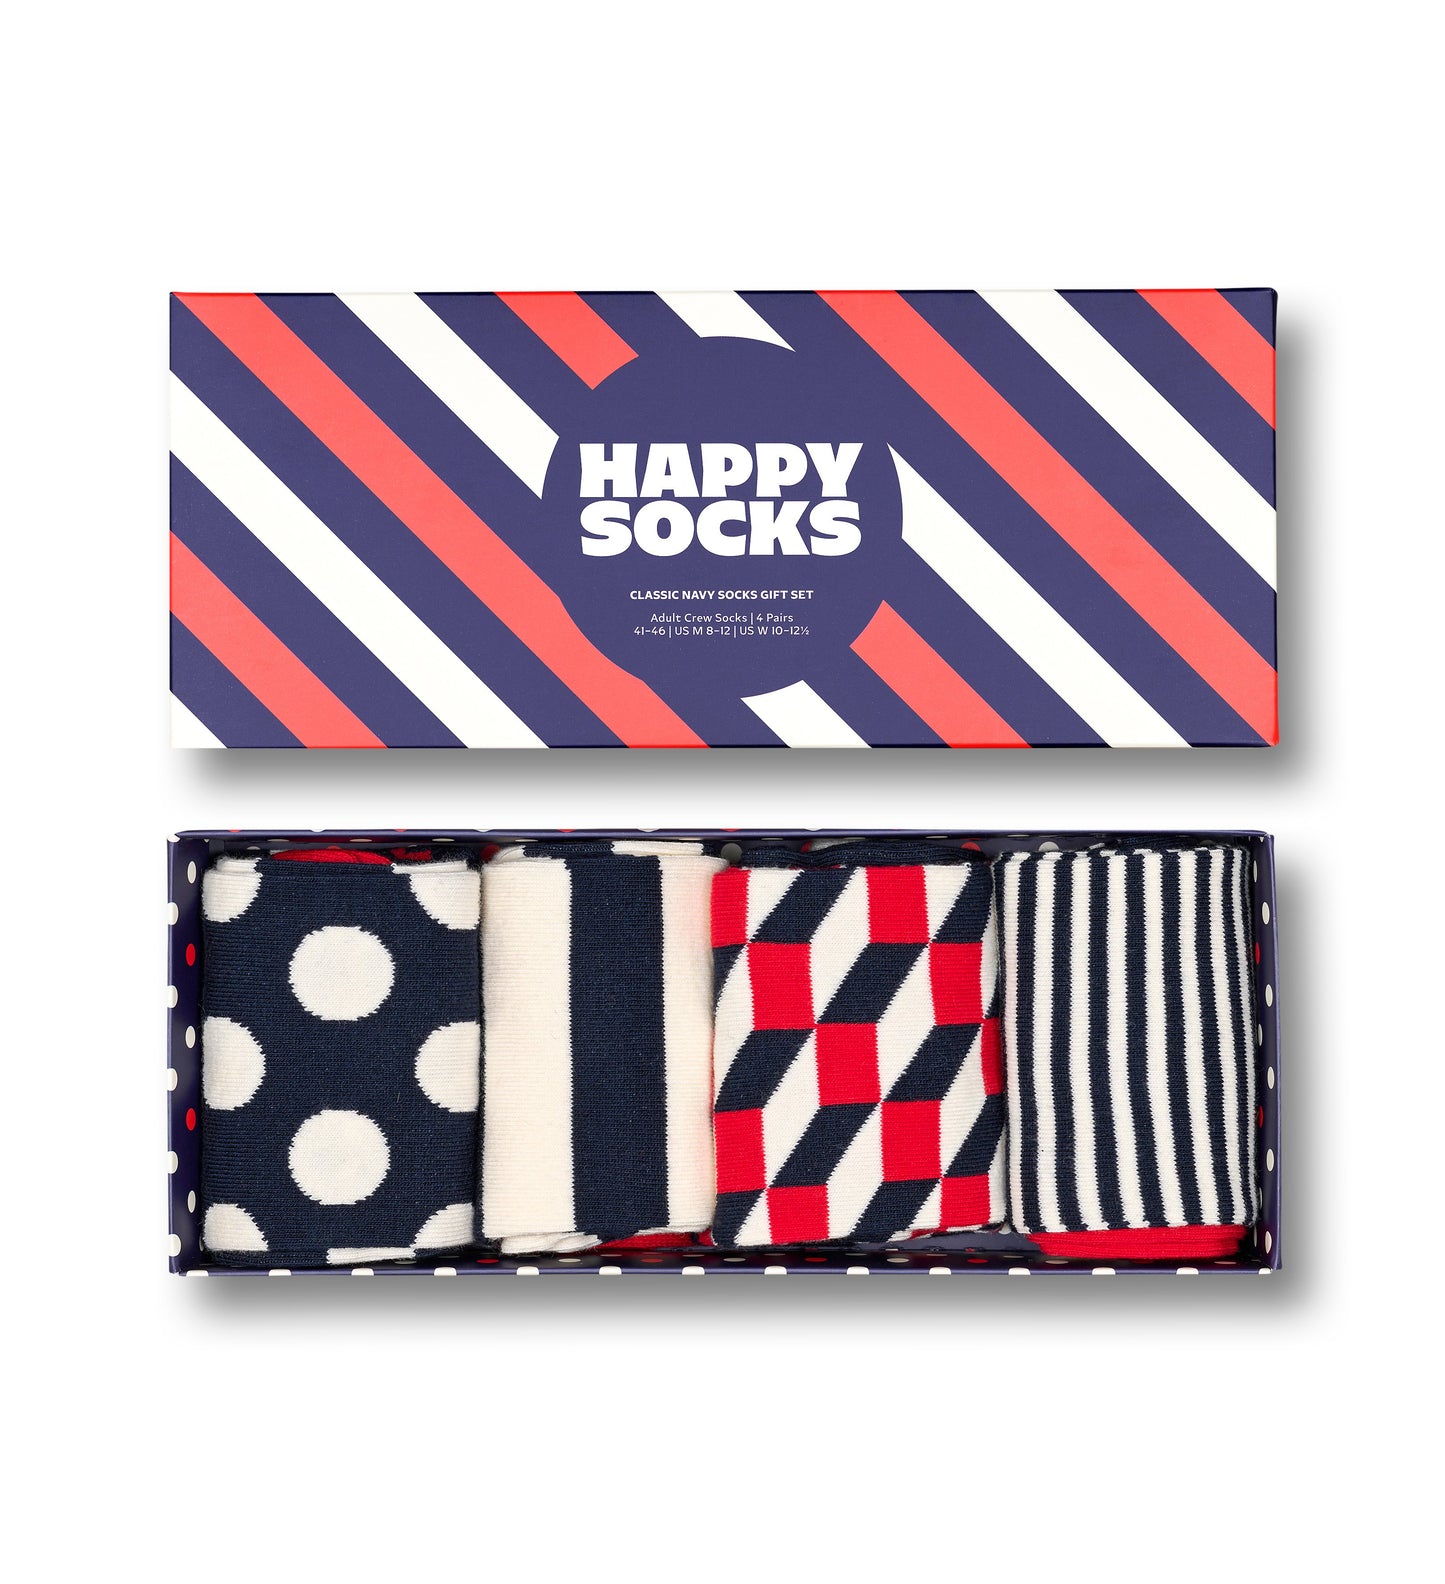 HAPPY SOCKS 4-Pack Classic Navy Socks Gift Set (36-40)